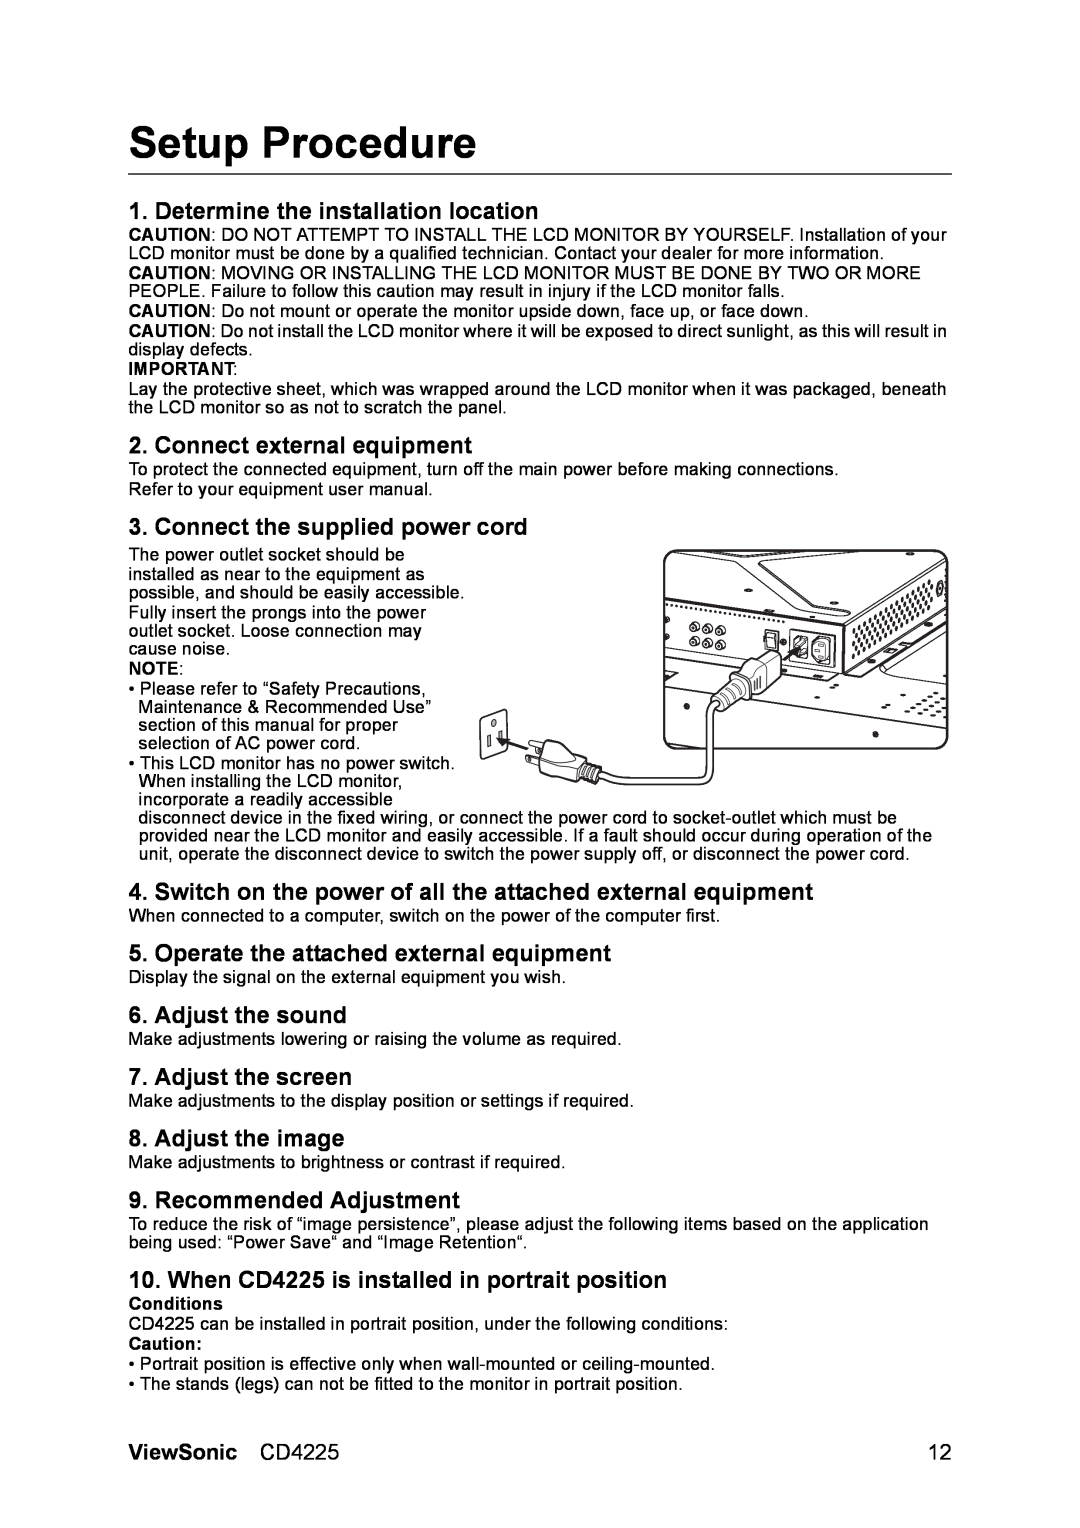 ViewSonic CD4225 manual Setup Procedure 